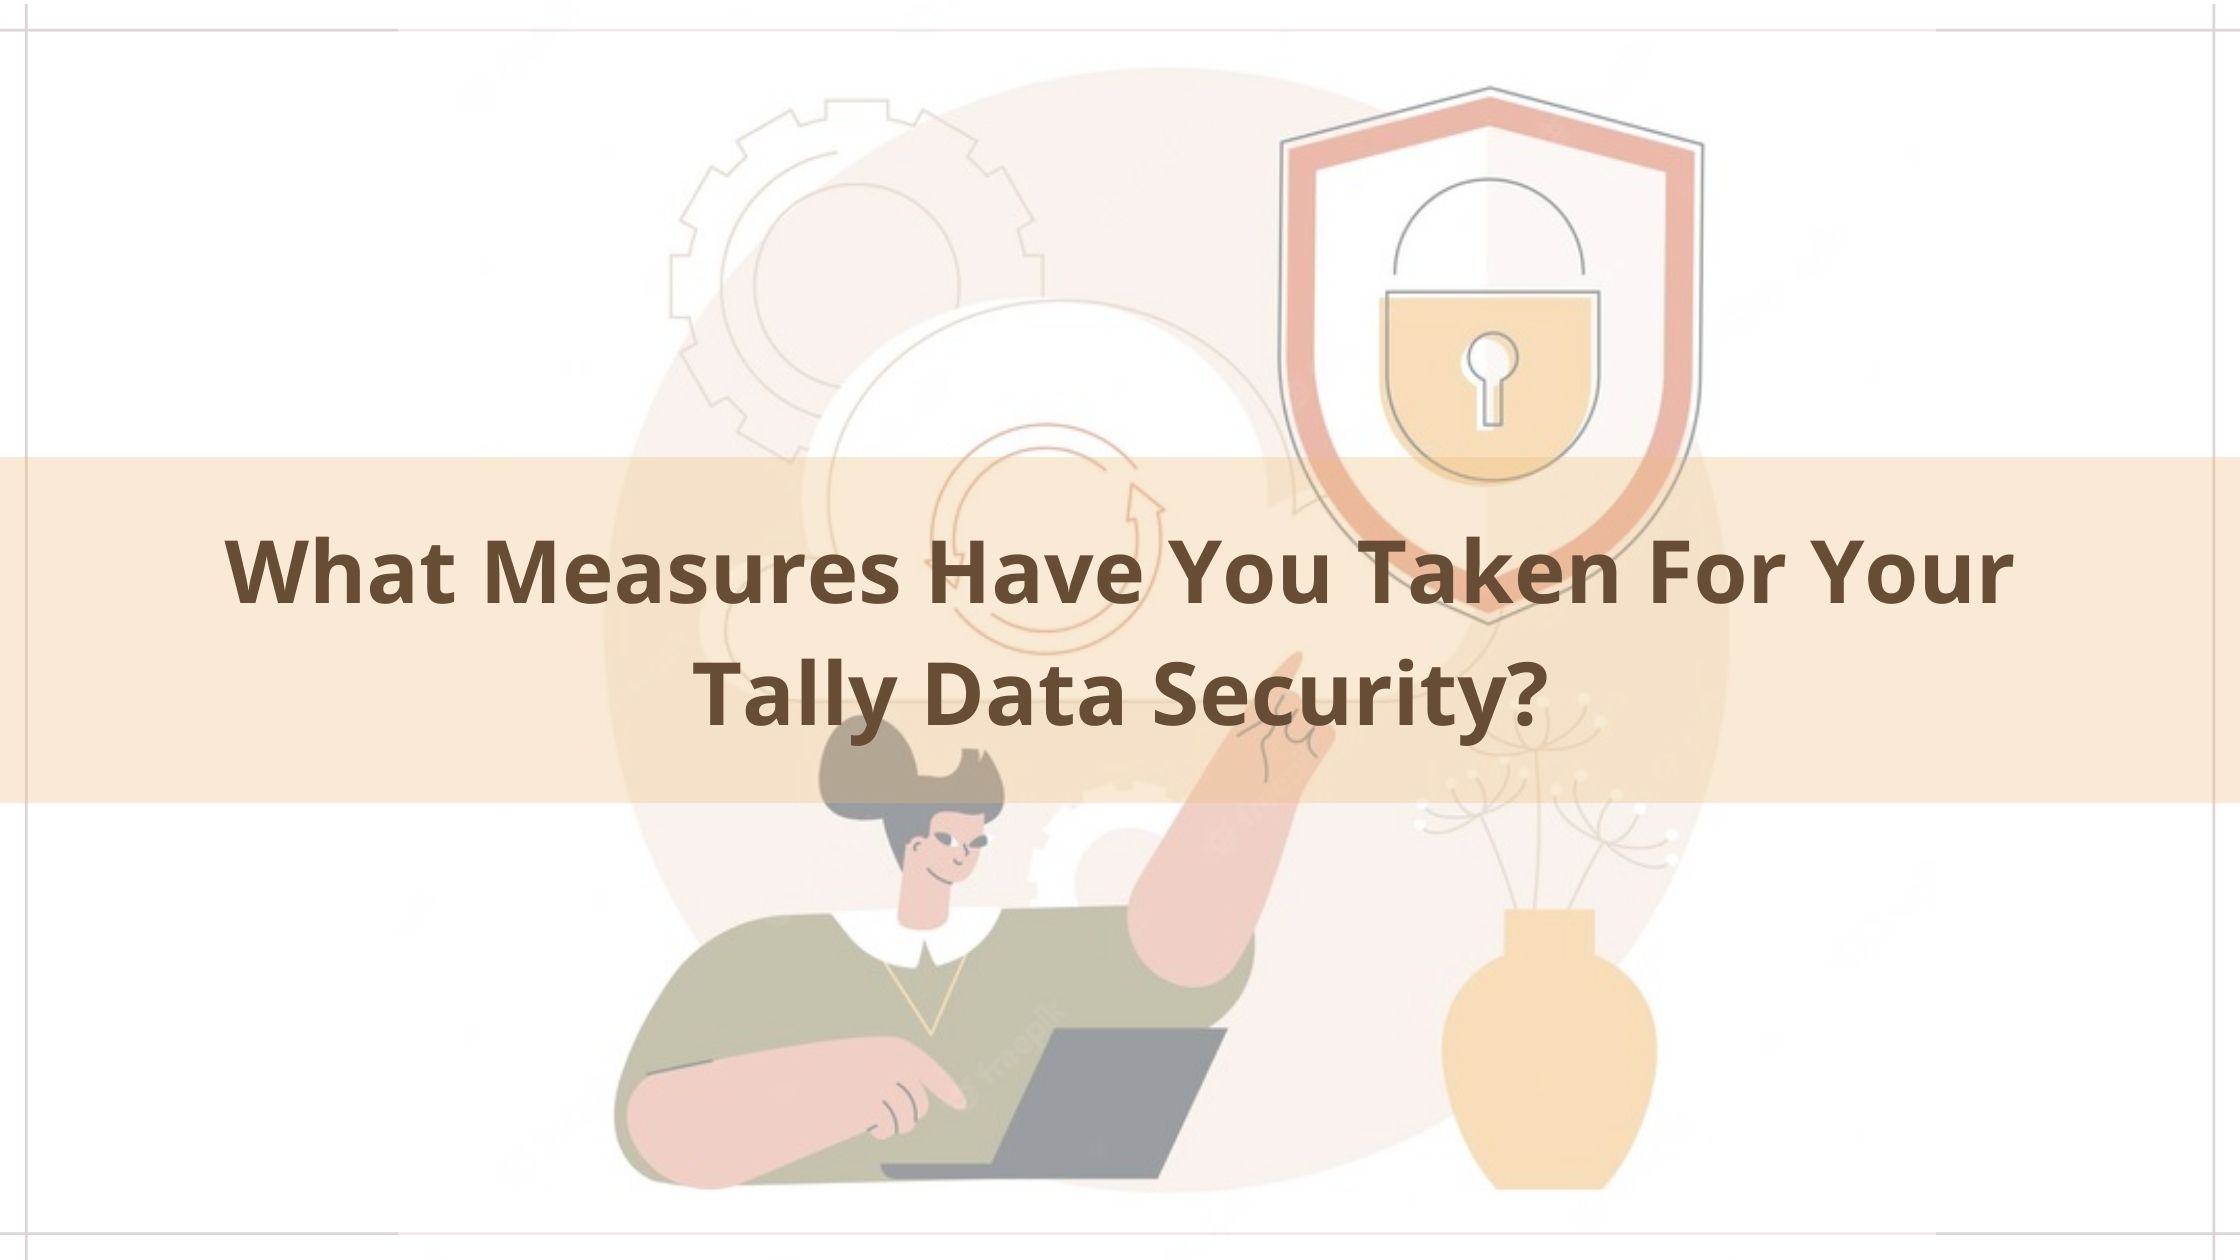 Tally data security on cloud